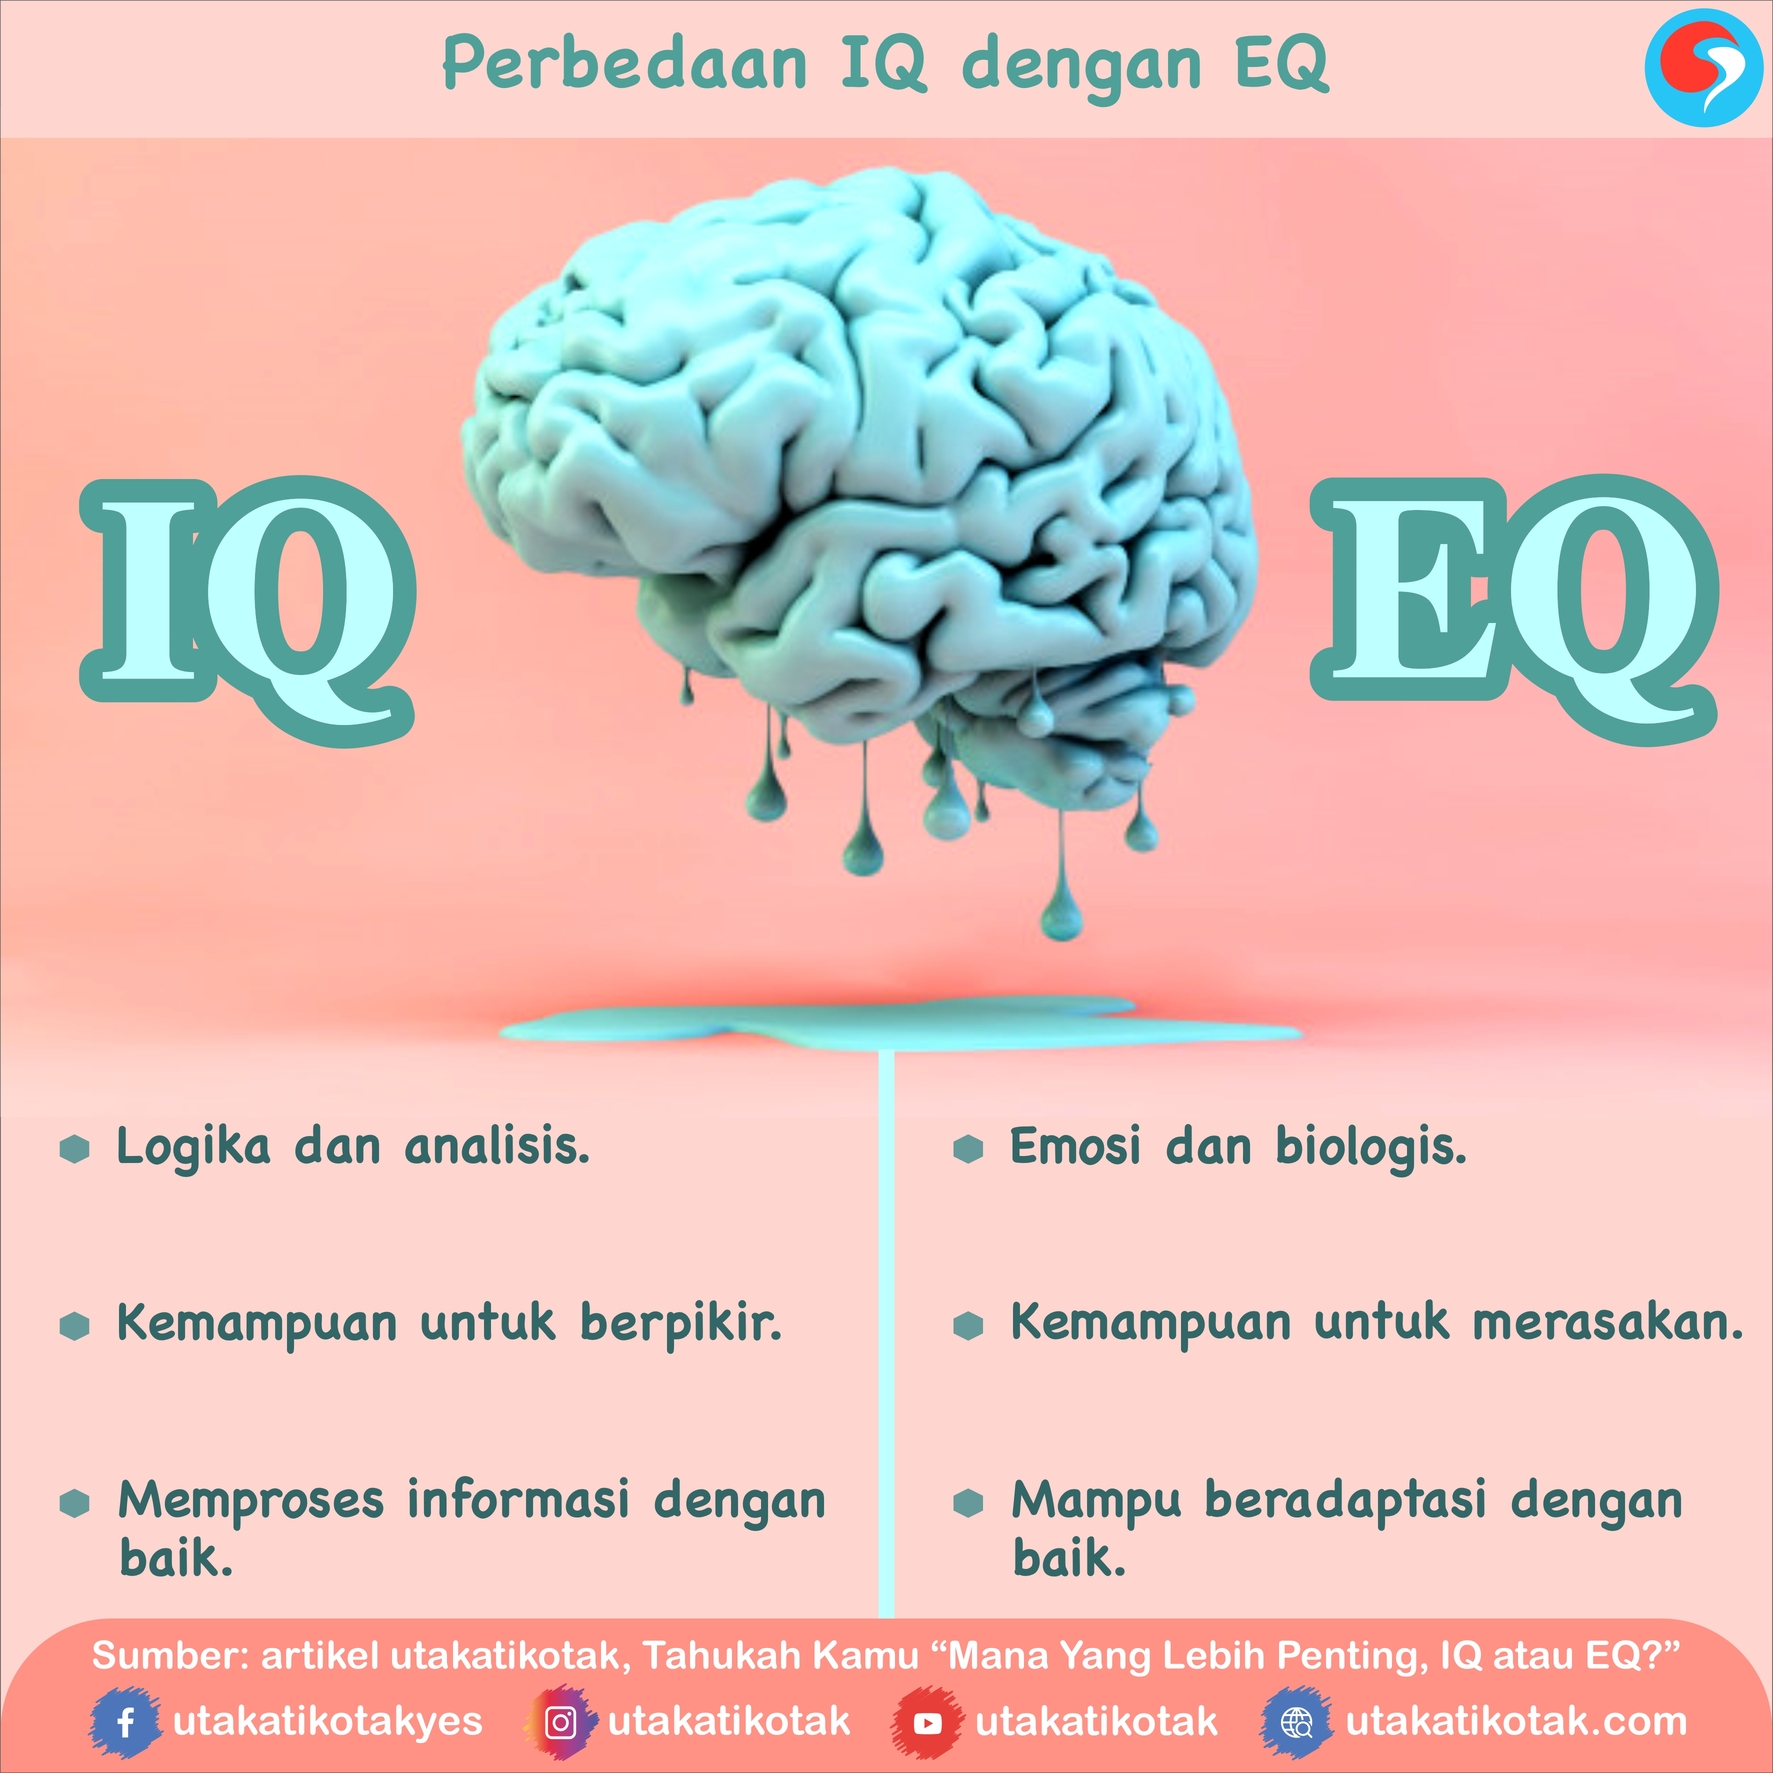 What's the Average IQ?